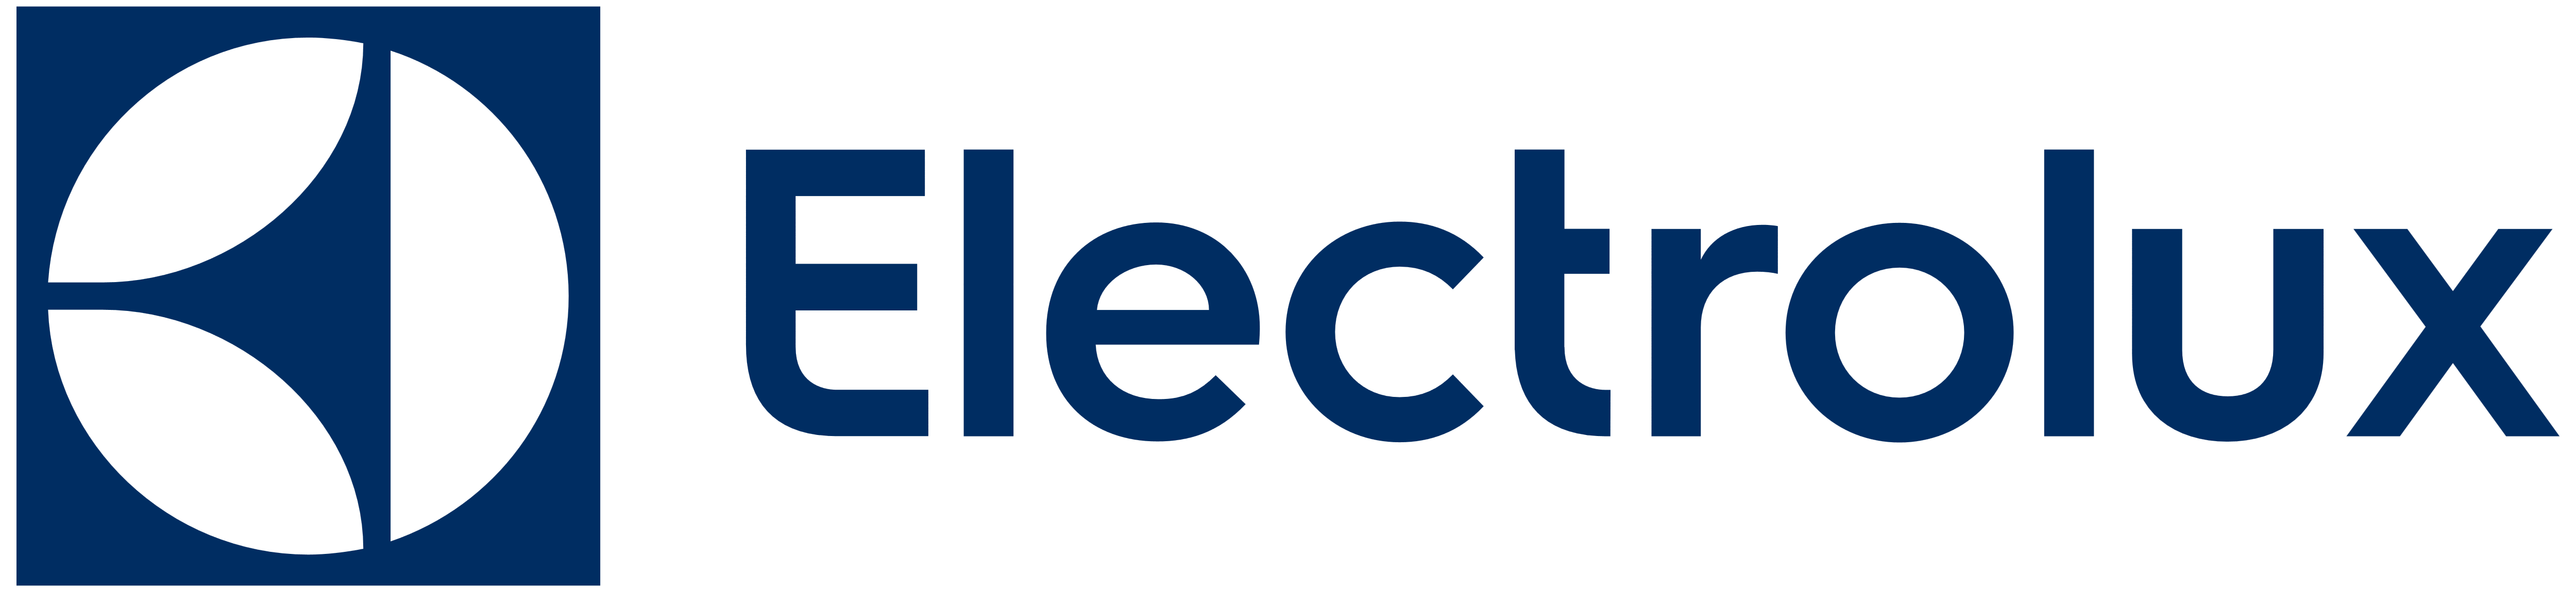 Electrolux_logo_new.png